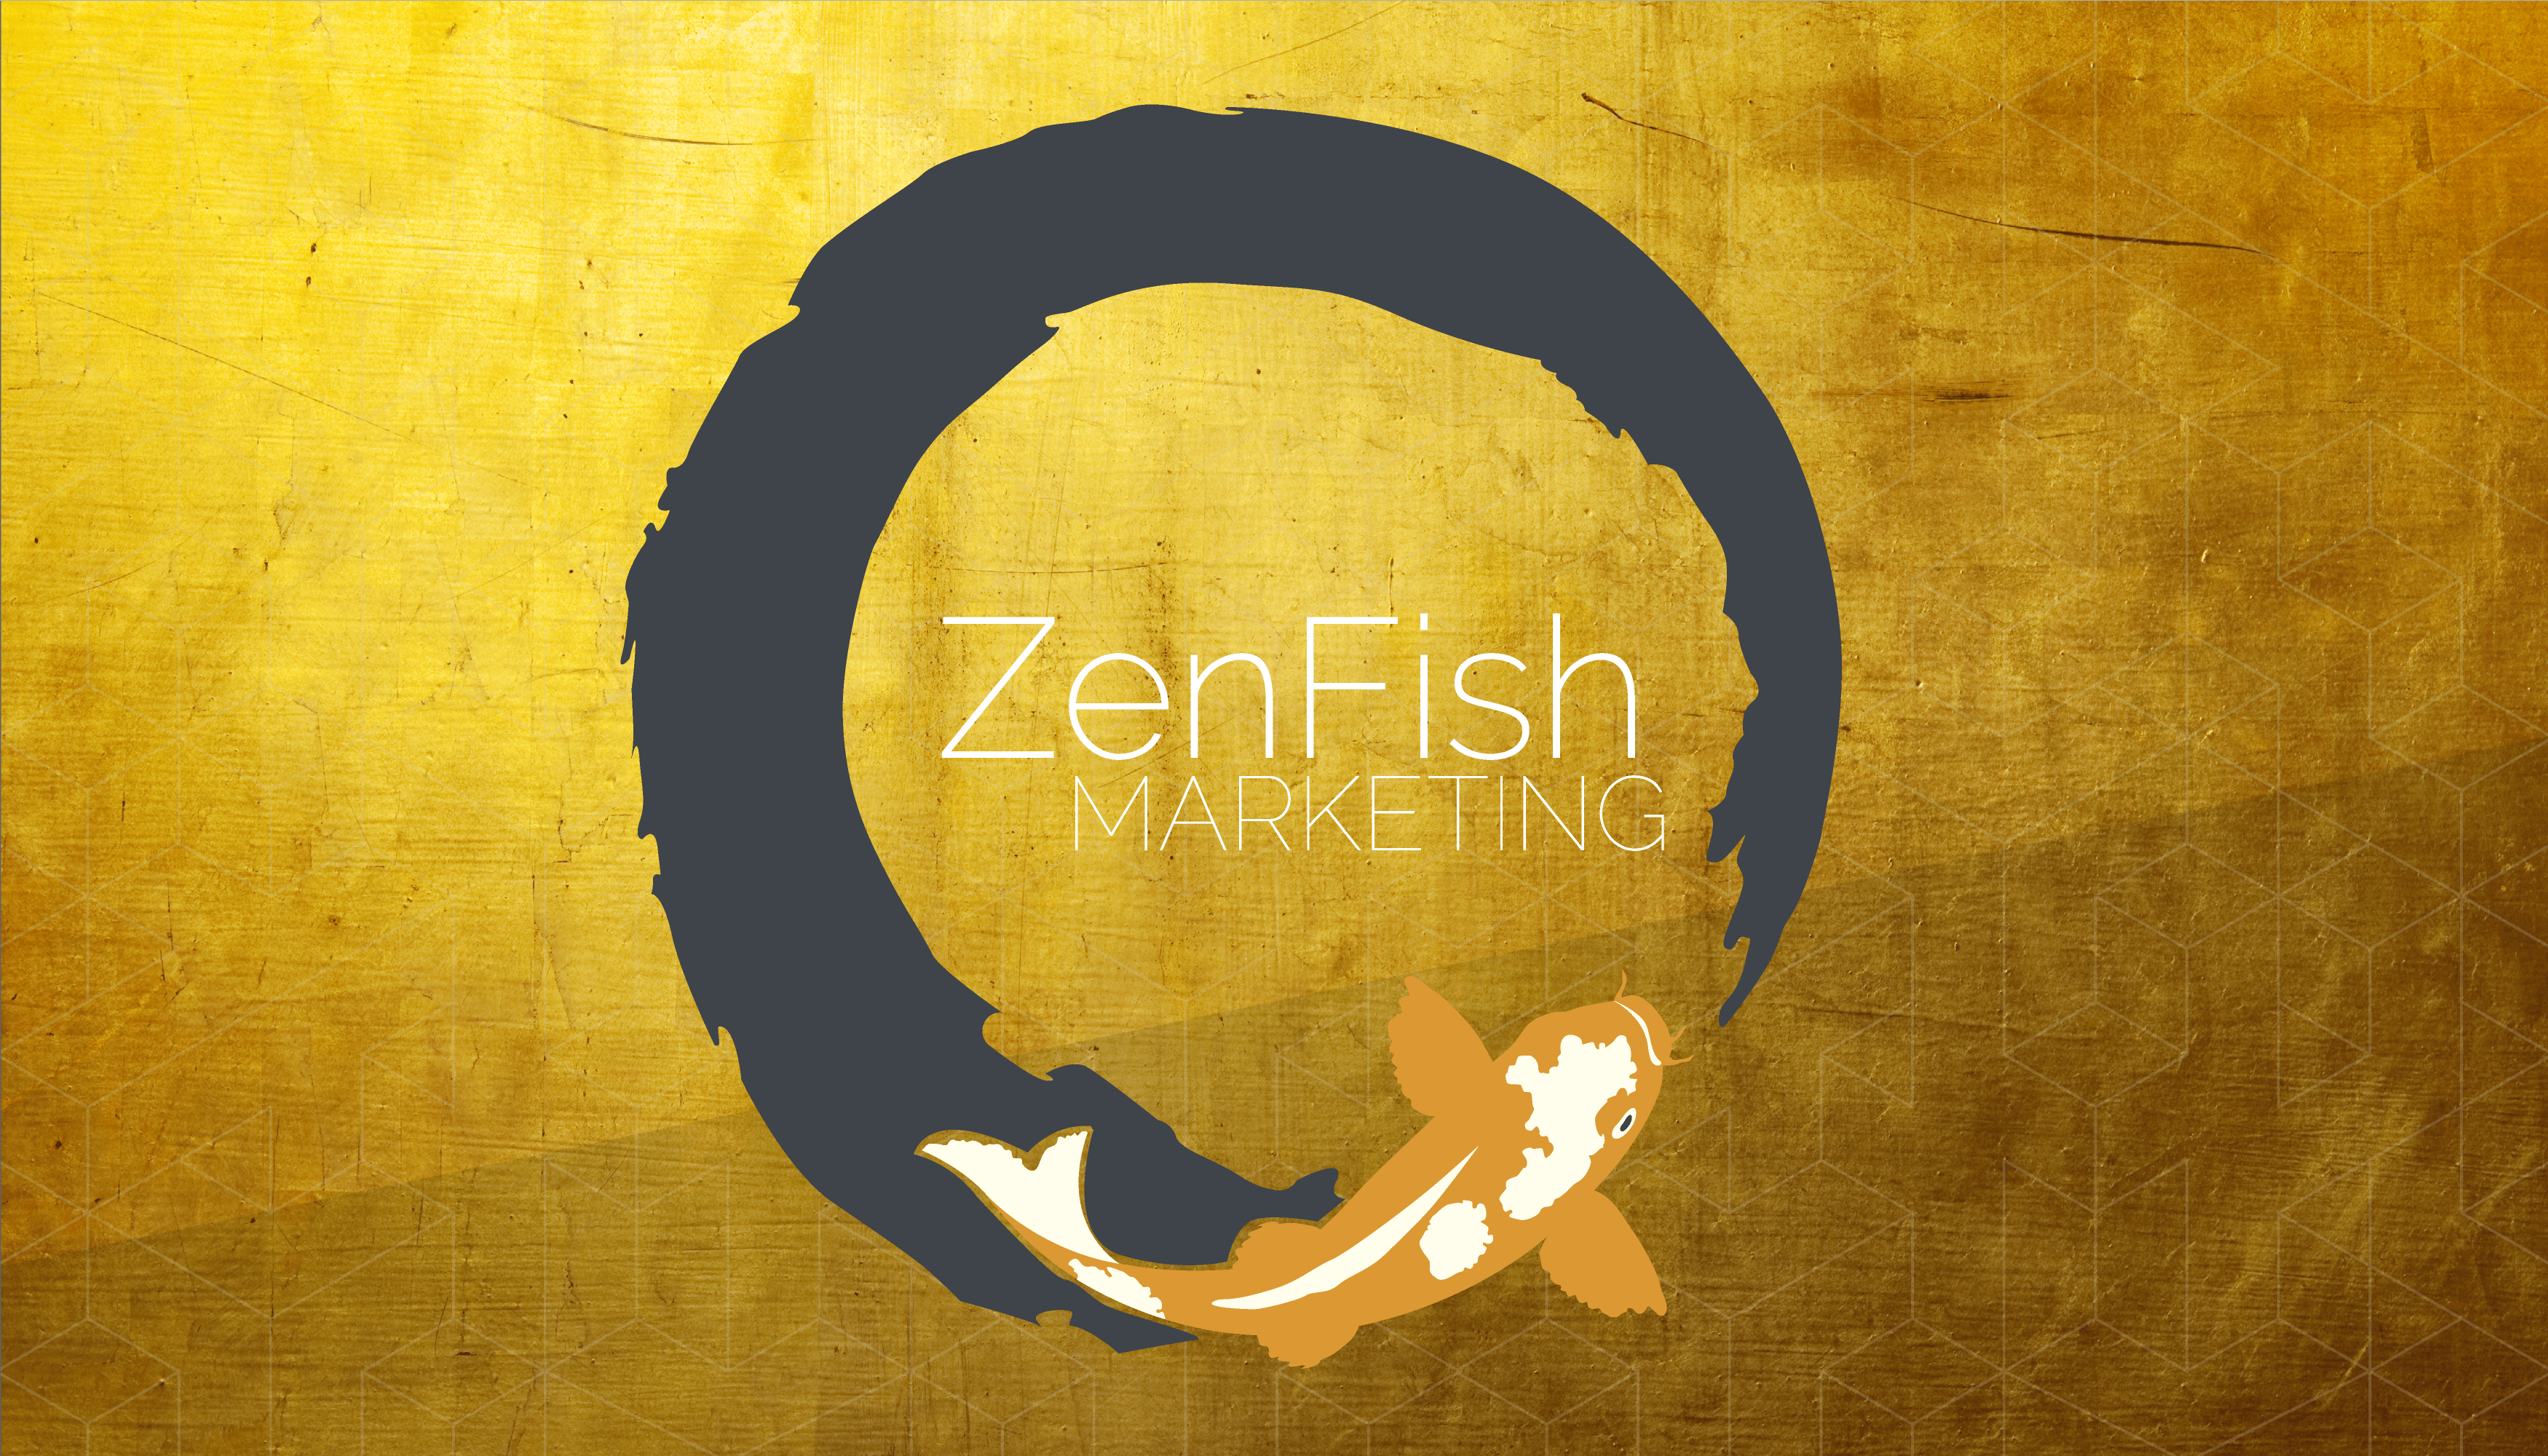 Zen Fish Logo - Digital Marketing Agency in Utah Valley by ZenFish Marketing